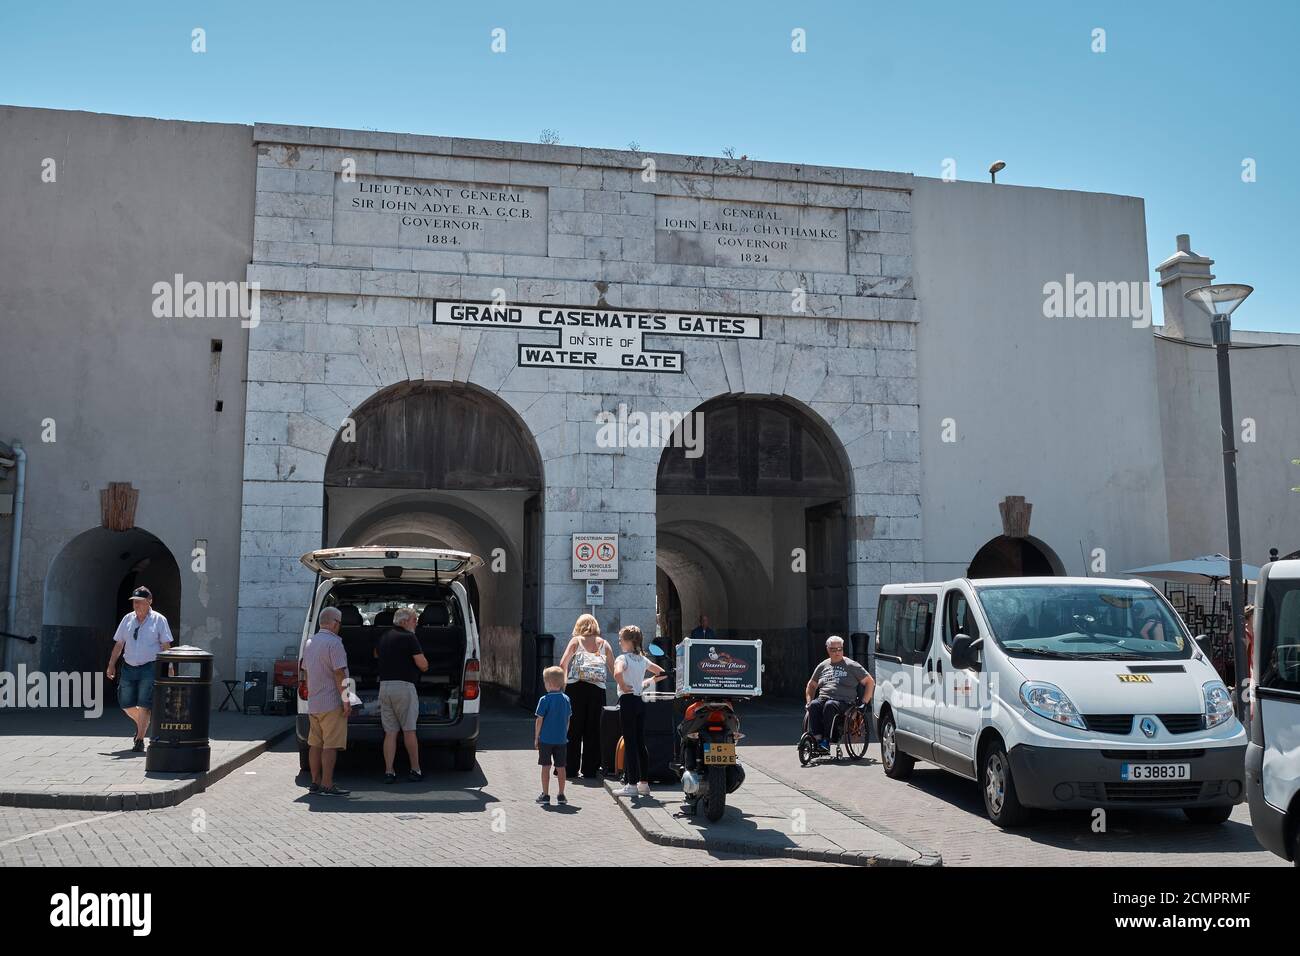 Grand Casemates gates entrance, Gibraltar, british overseas territory, Iberian peninsula, Europe. Stock Photo